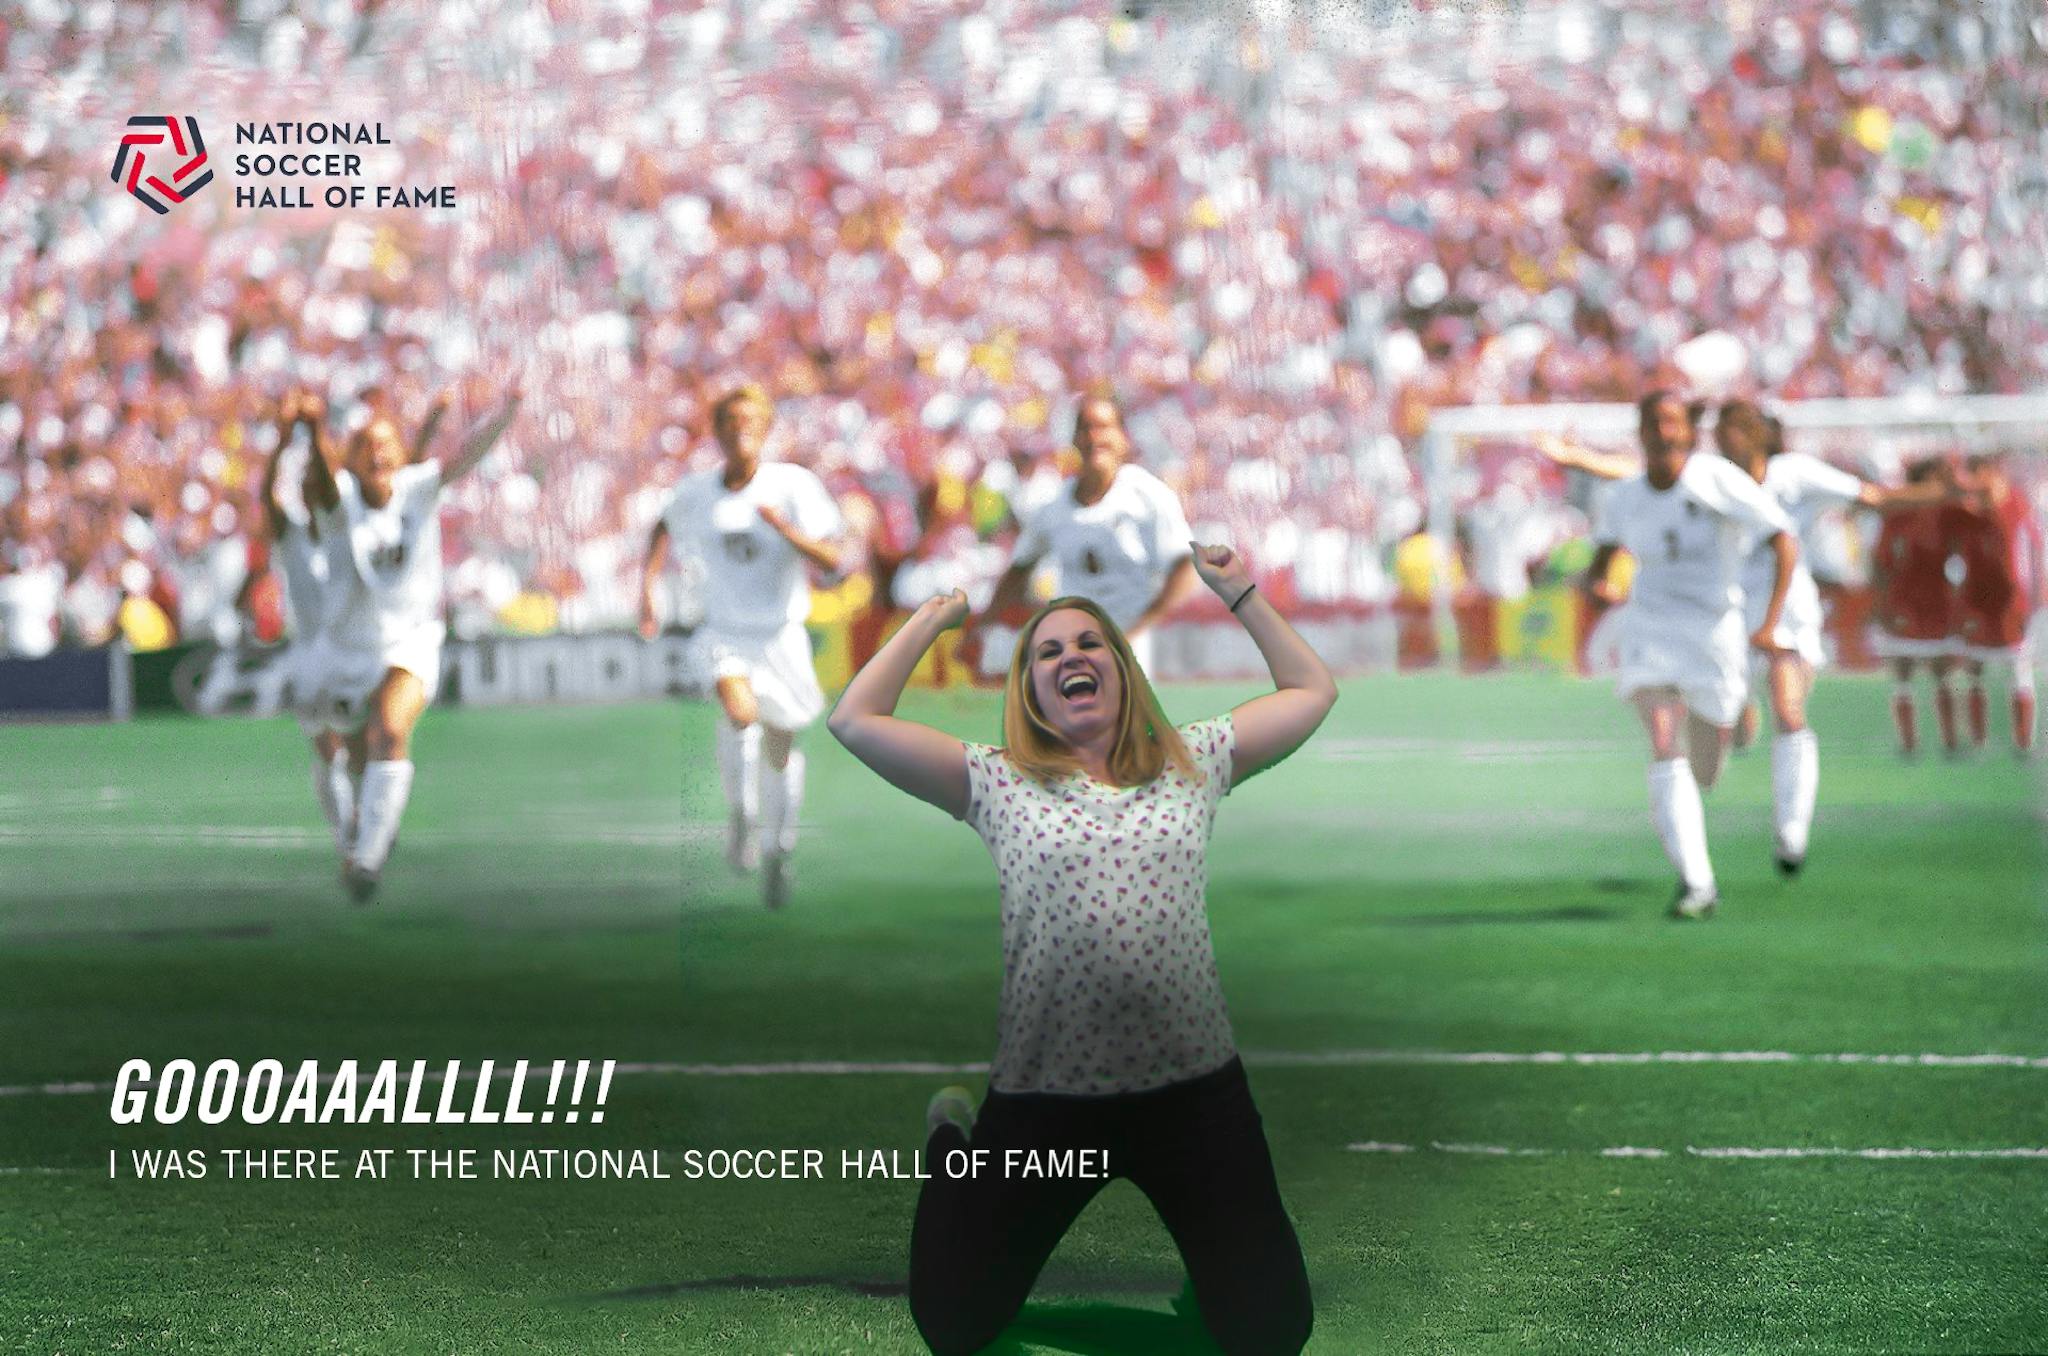 Soccer Mom has fun celebrating a goal at the soccer HOF.